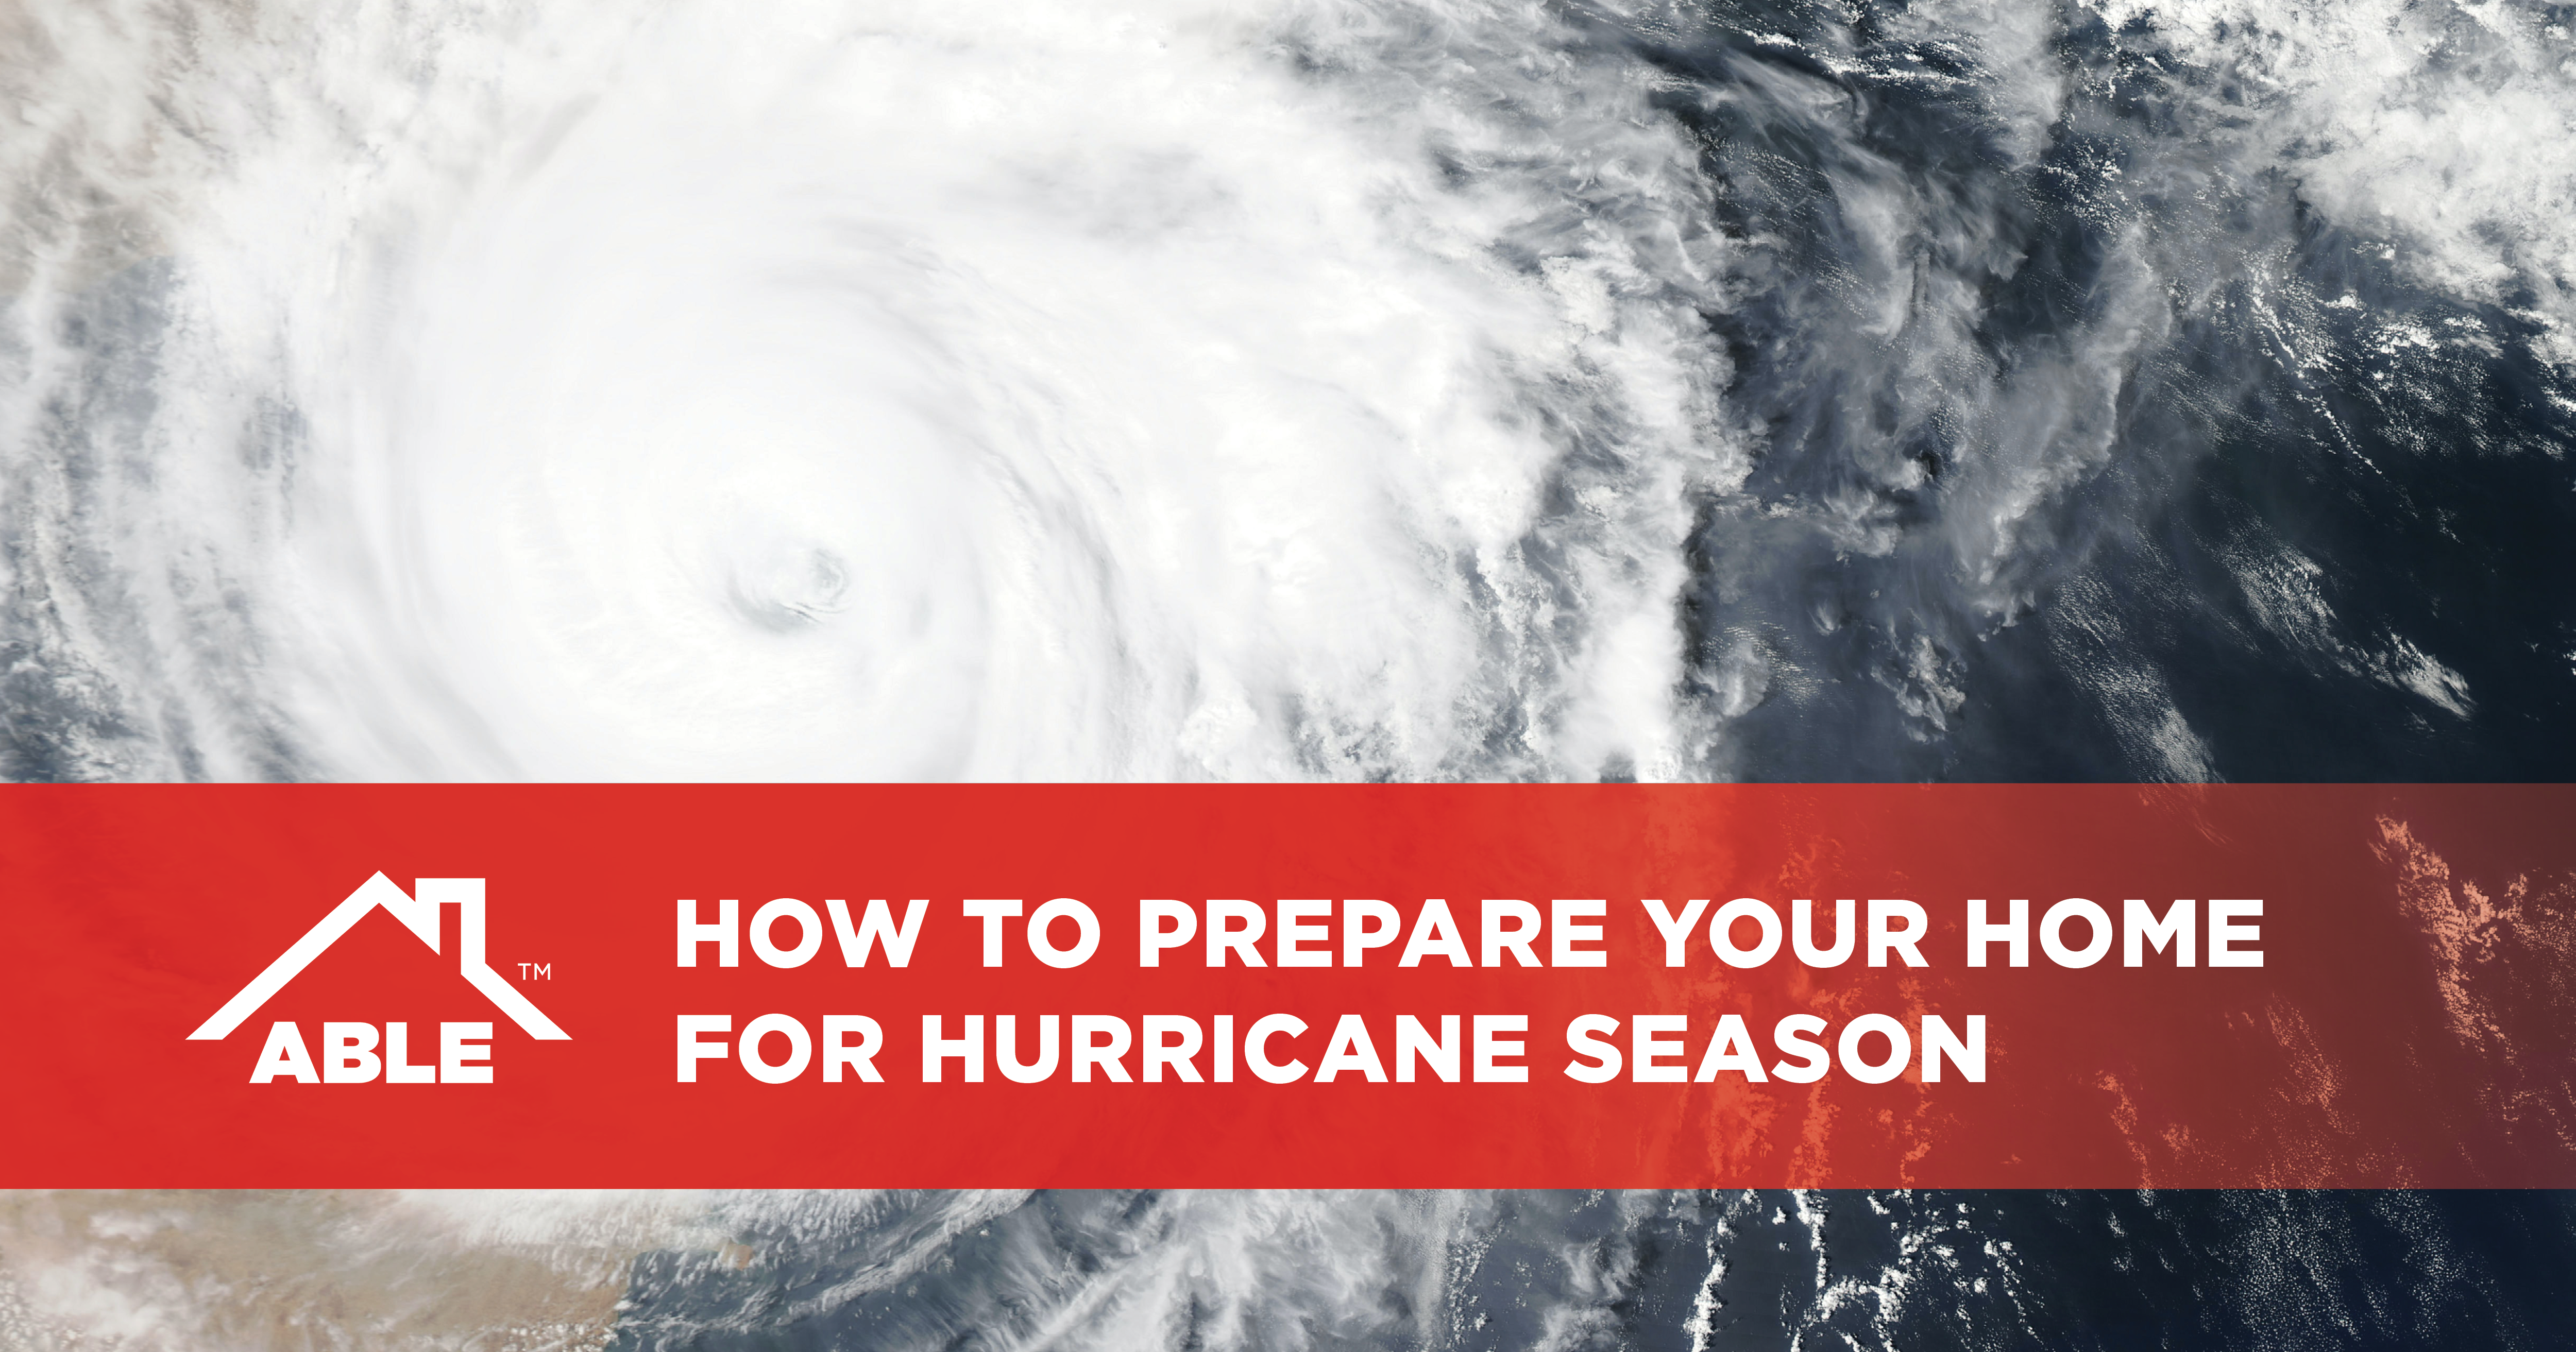 How to prepare your home for hurricane season